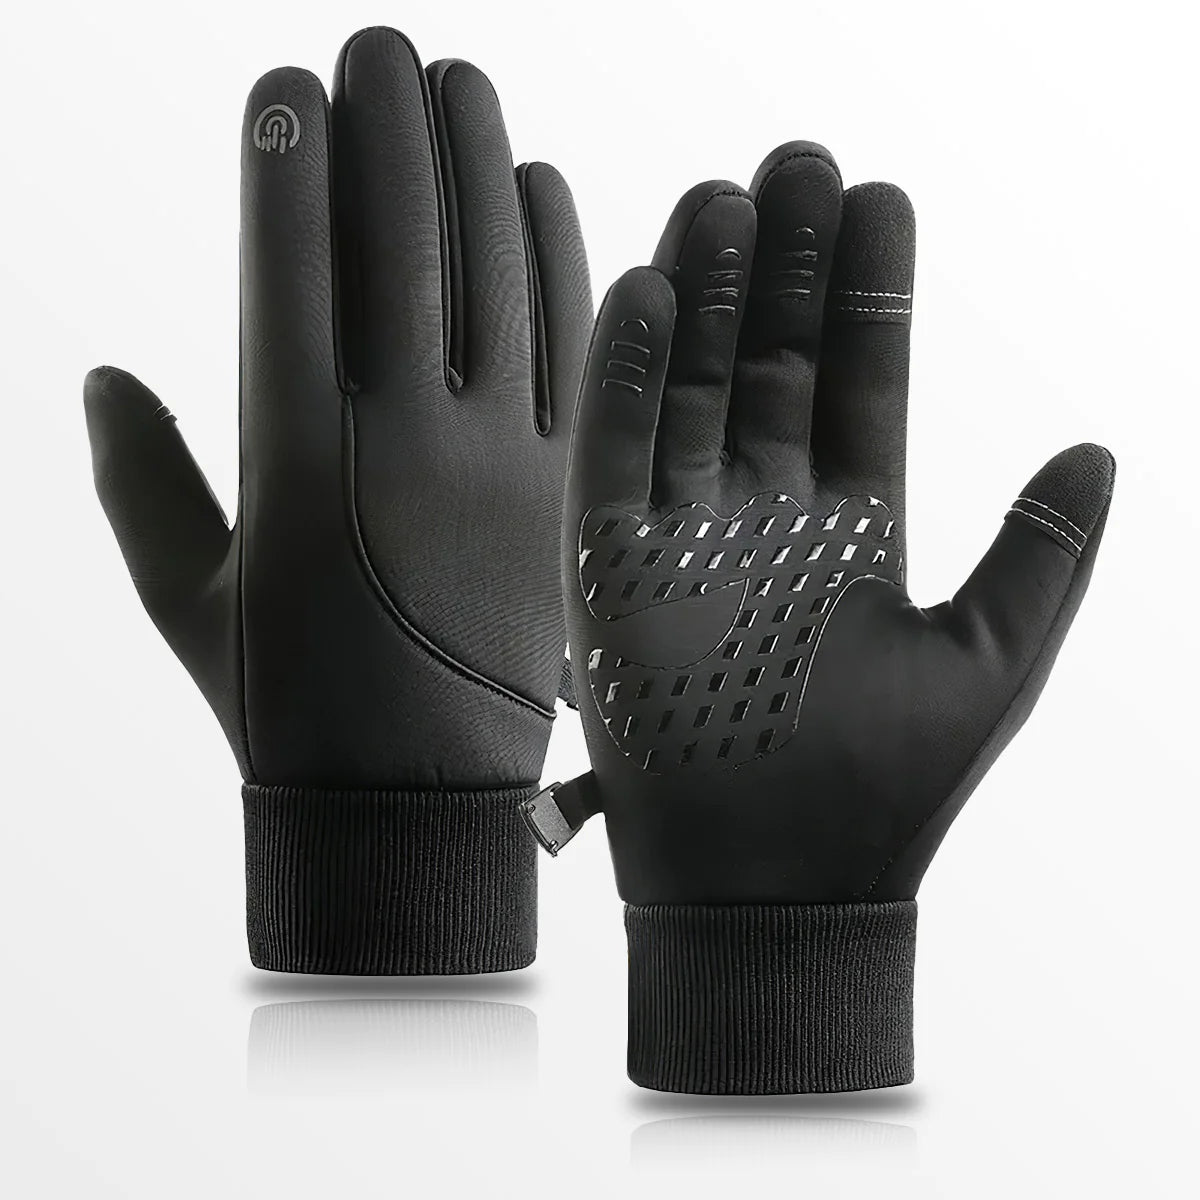 FrostDefender™ - Premium Thermal Gloves